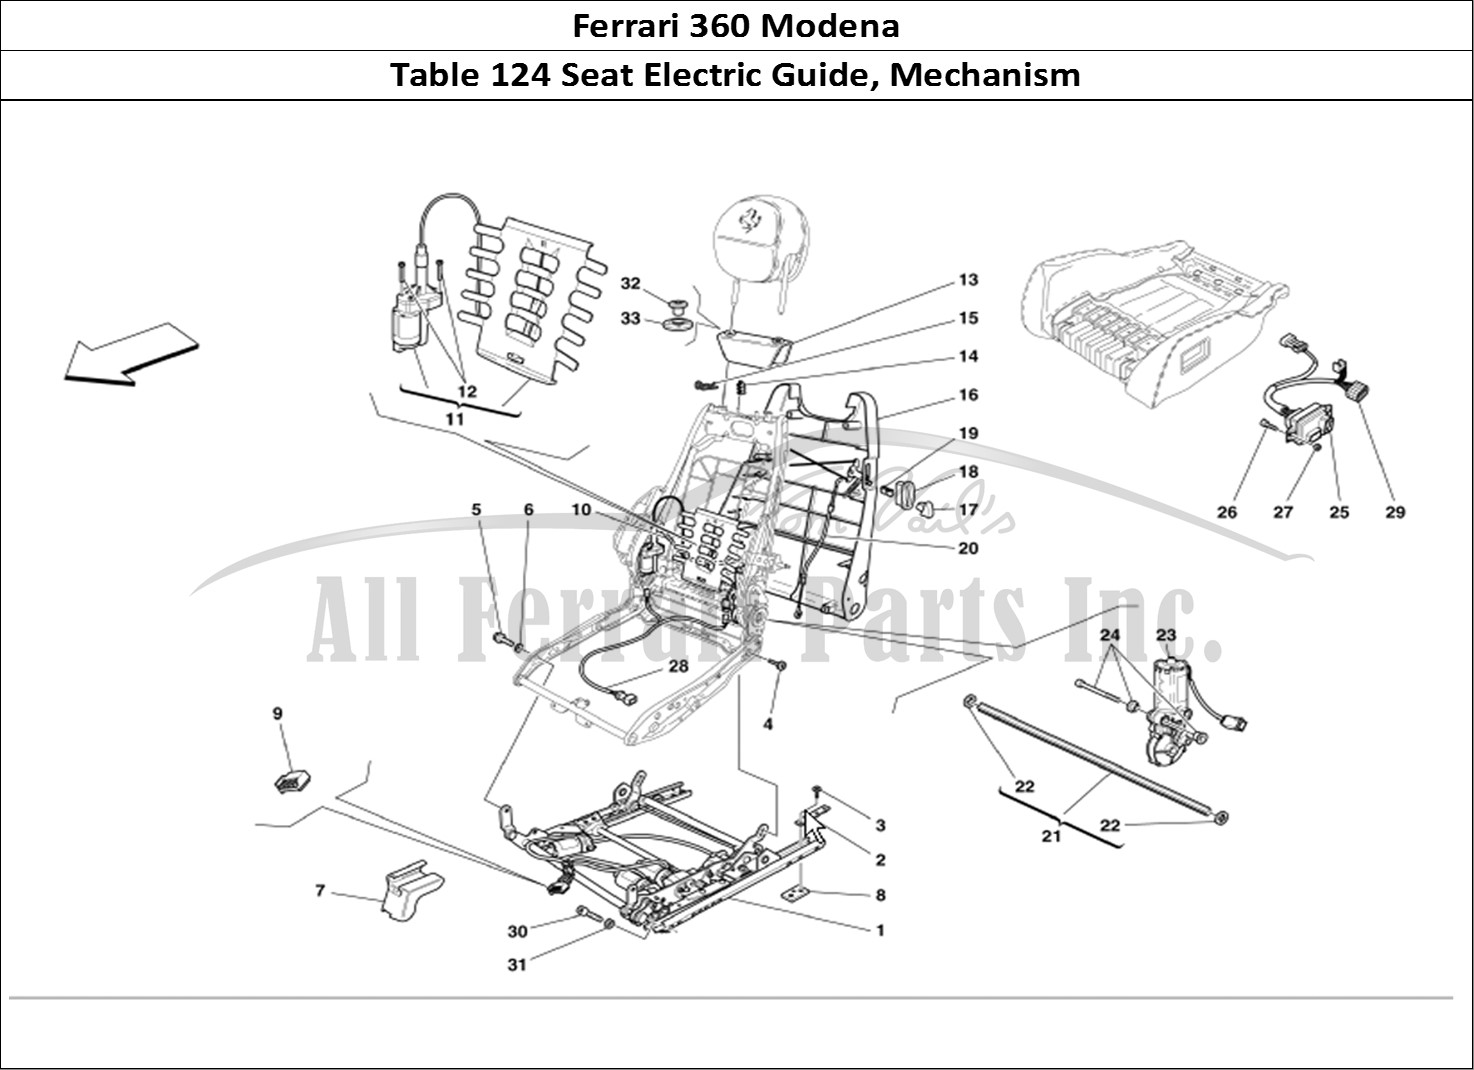 Ferrari Parts Ferrari 360 Modena Page 124 Electrical Seat Guide and